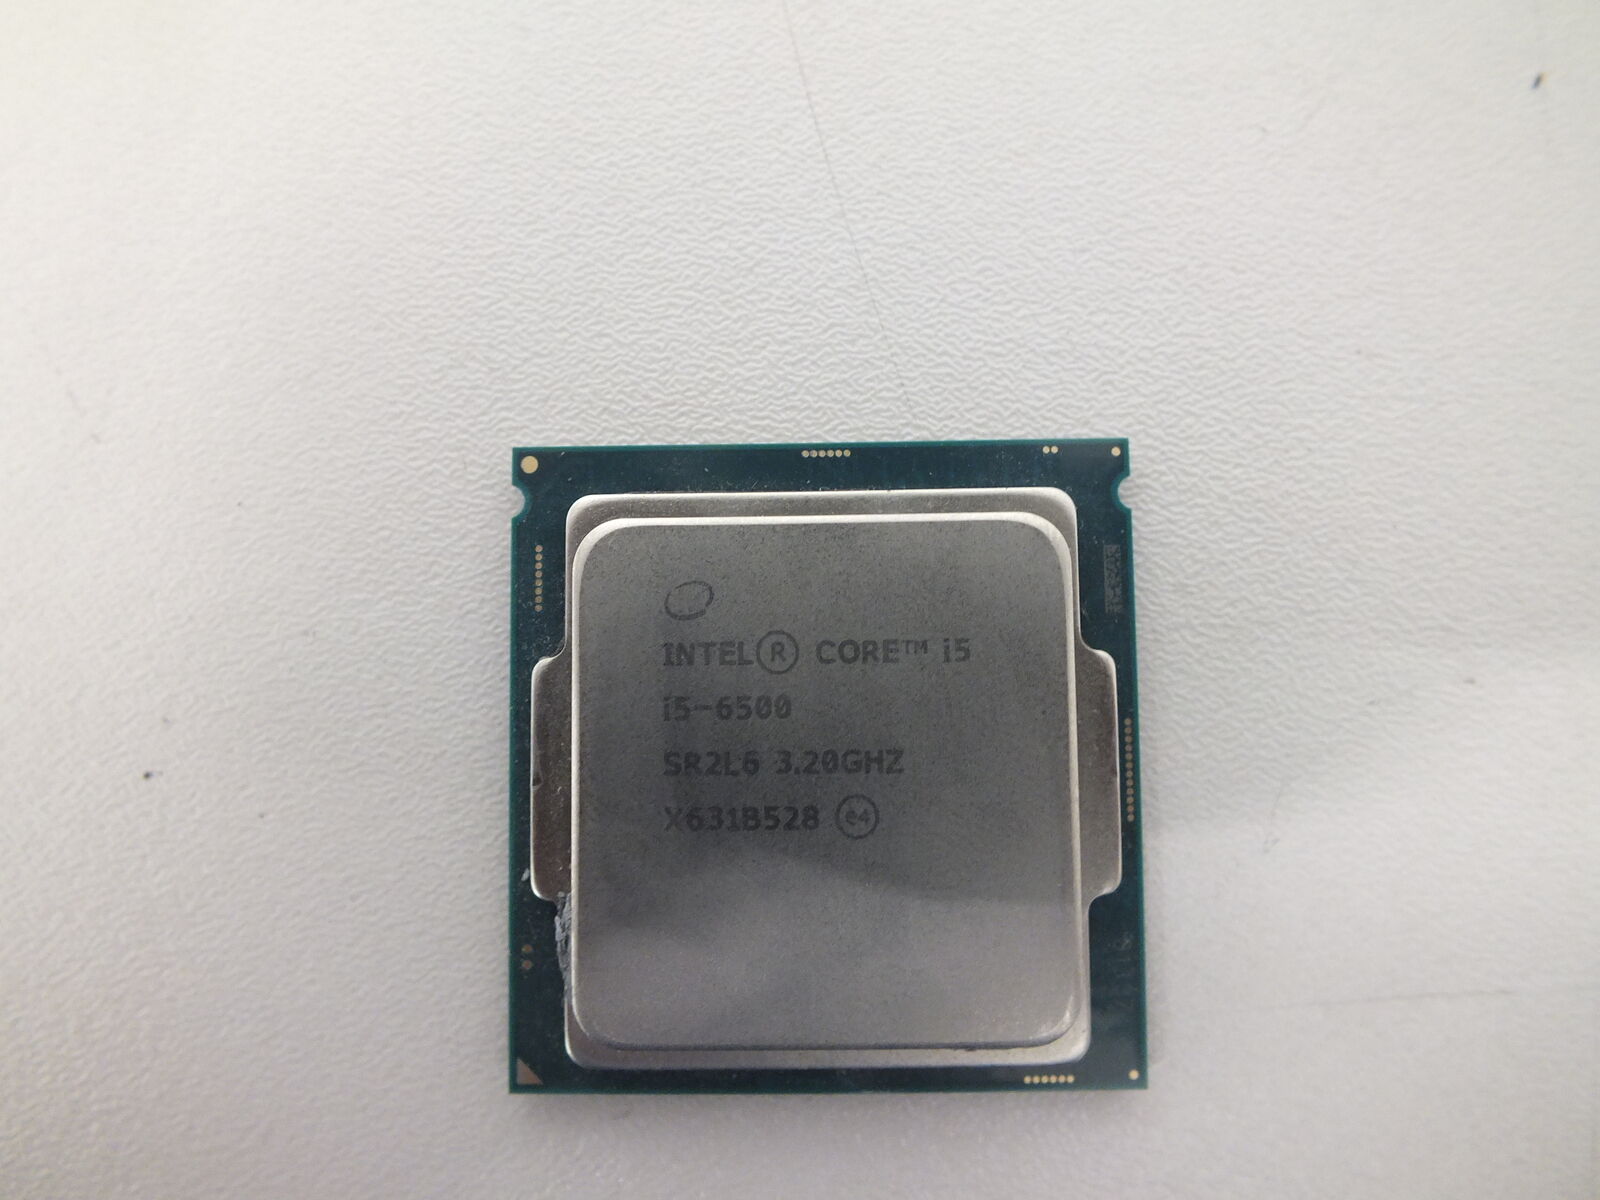 [ LOT OF 5 ] Intel Core i5-6500 SR2L6 3.20 GHZ Processor